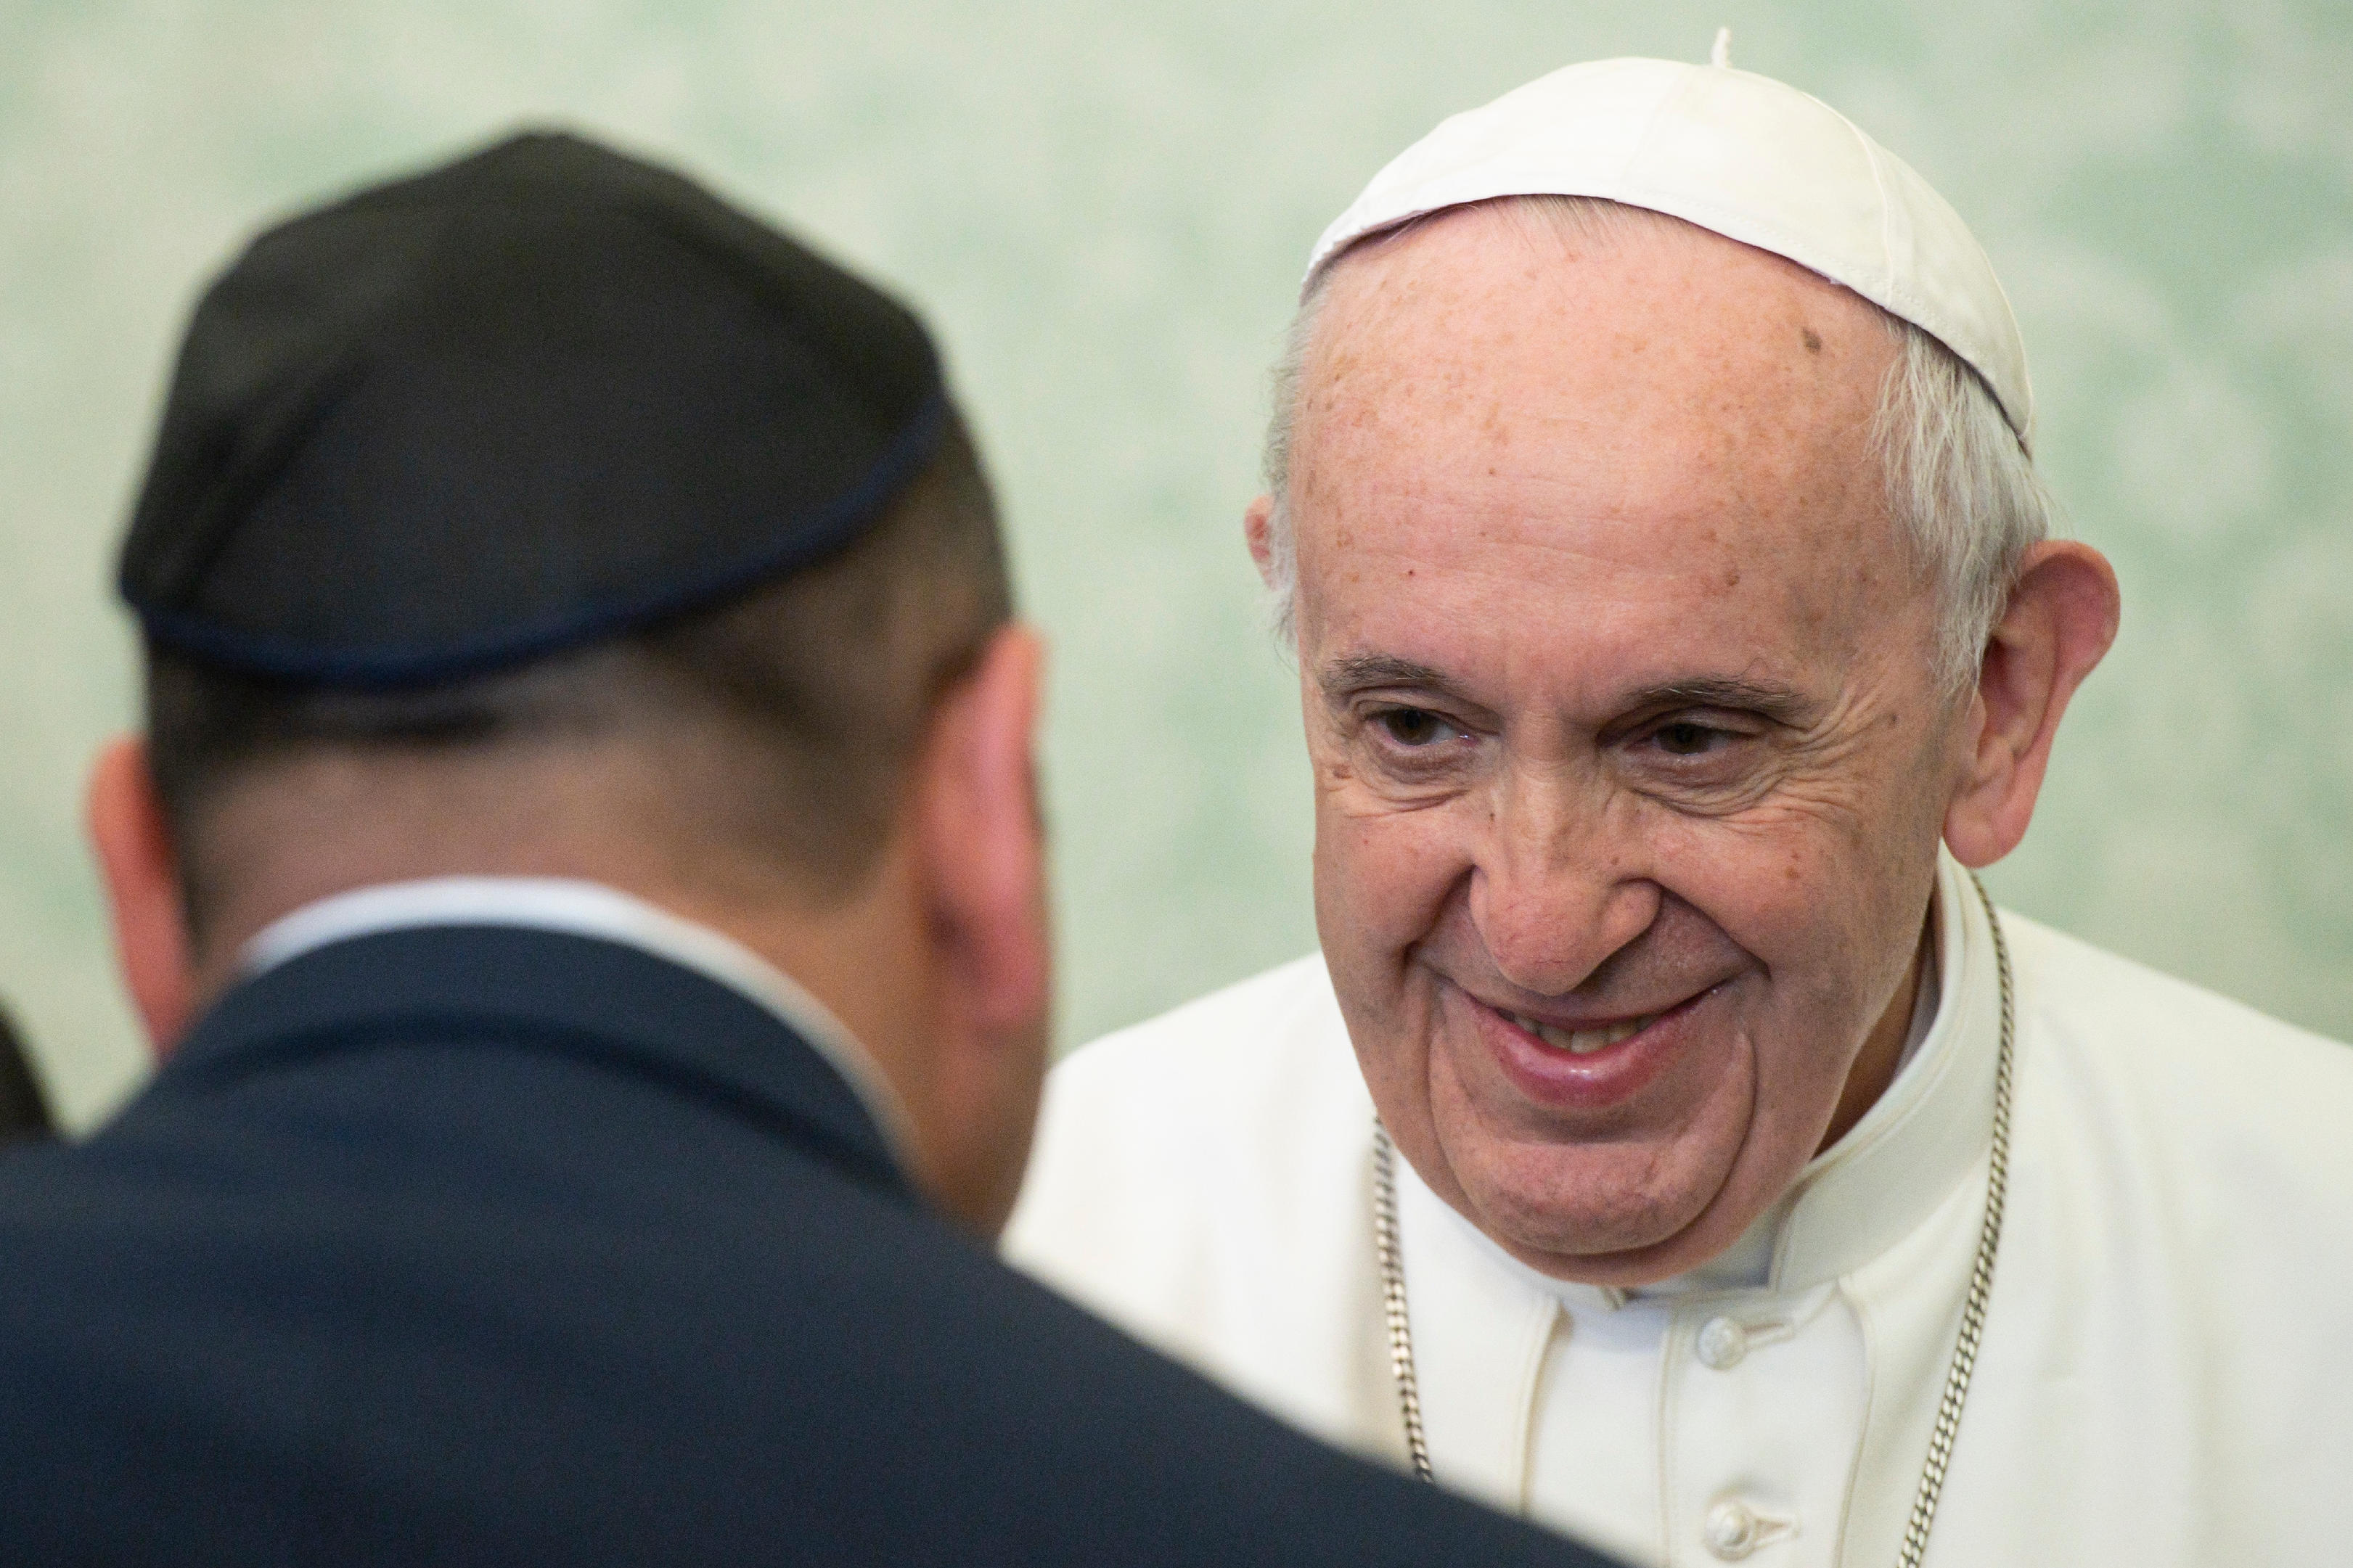 A Christian cannot be an anti-semite, Pope tells Jewish community